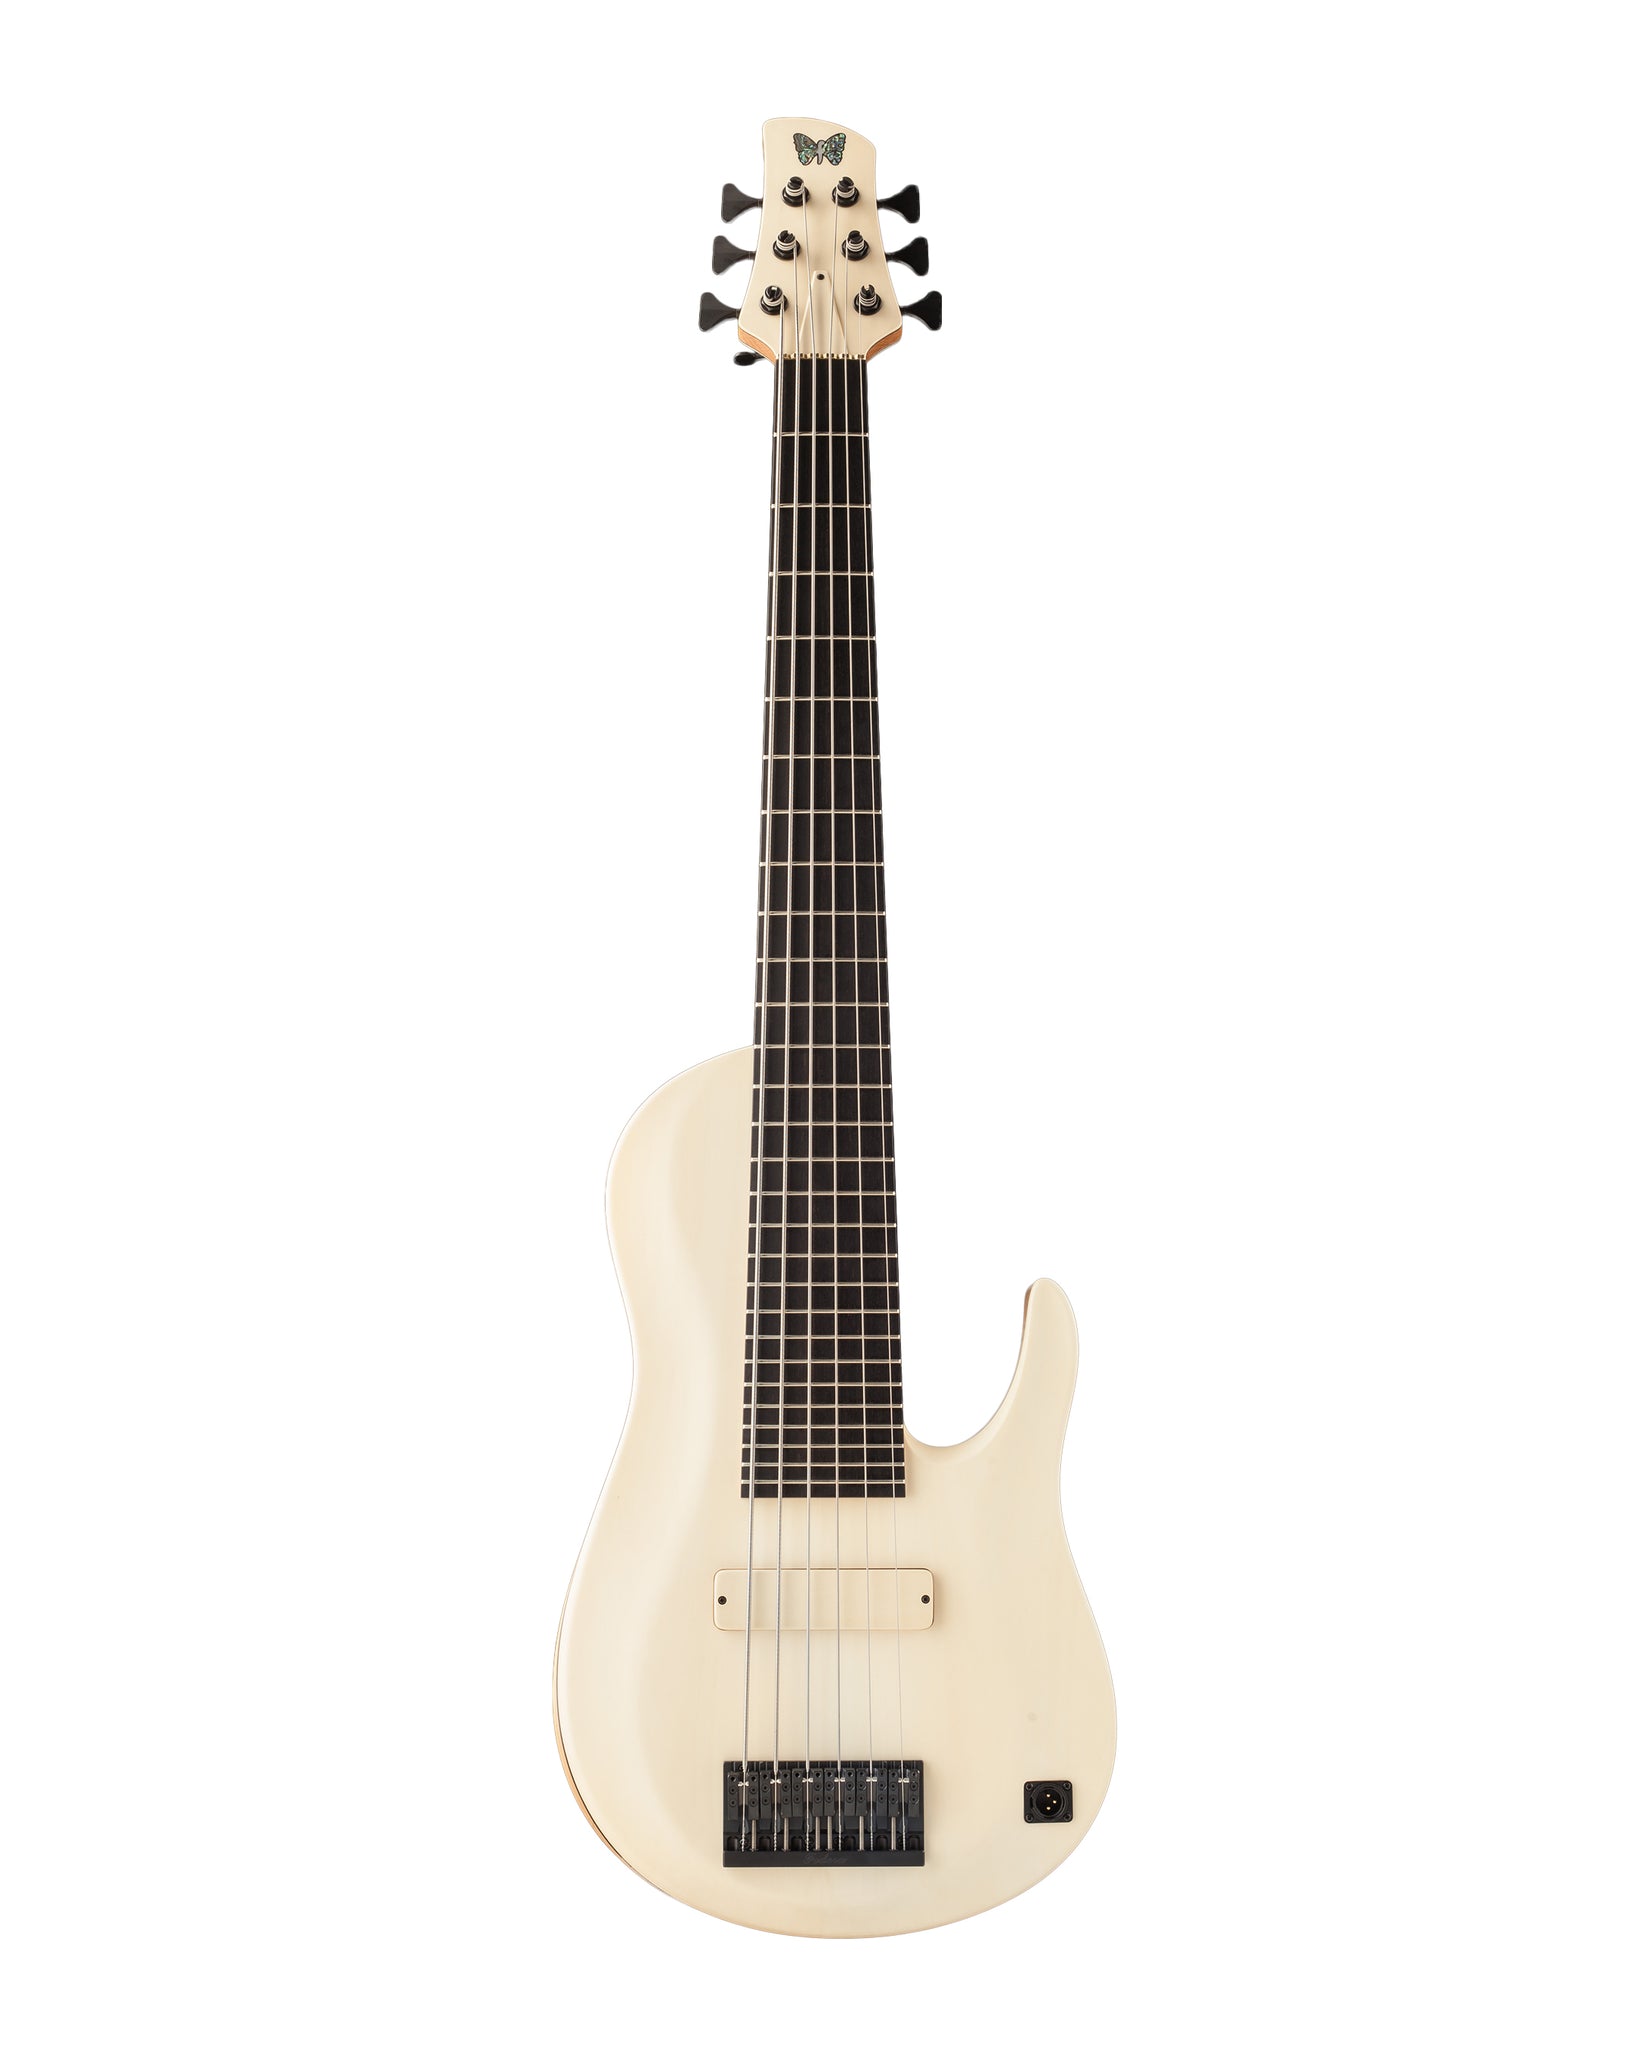 Custom Series – Fodera Guitars